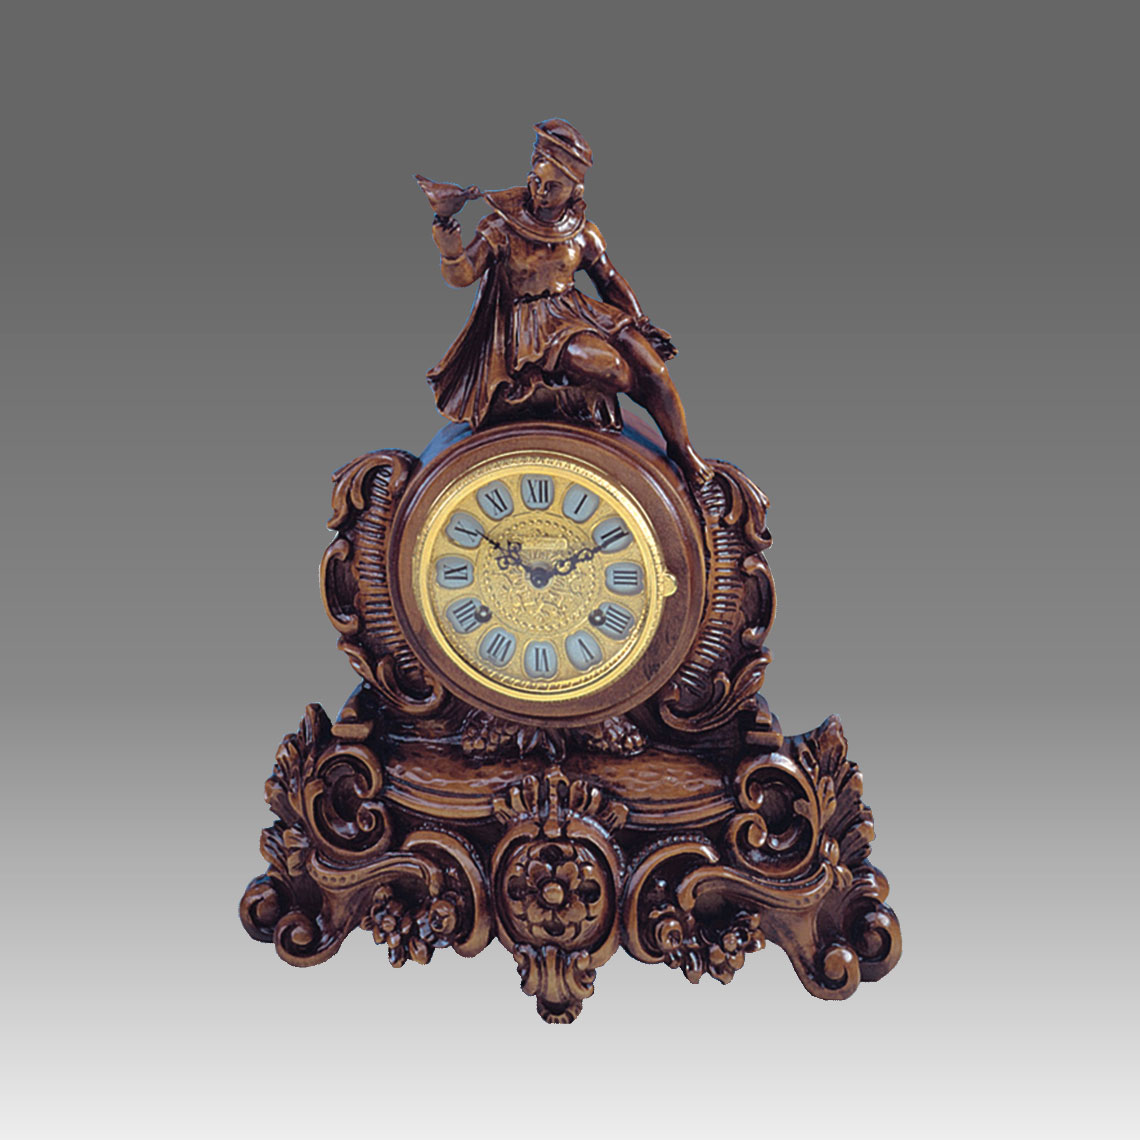 Mante Clock, Table Clock, Cimn Clock, Art.332/1 walnut - Bim Bam melody on Bells, gilt gold round dial